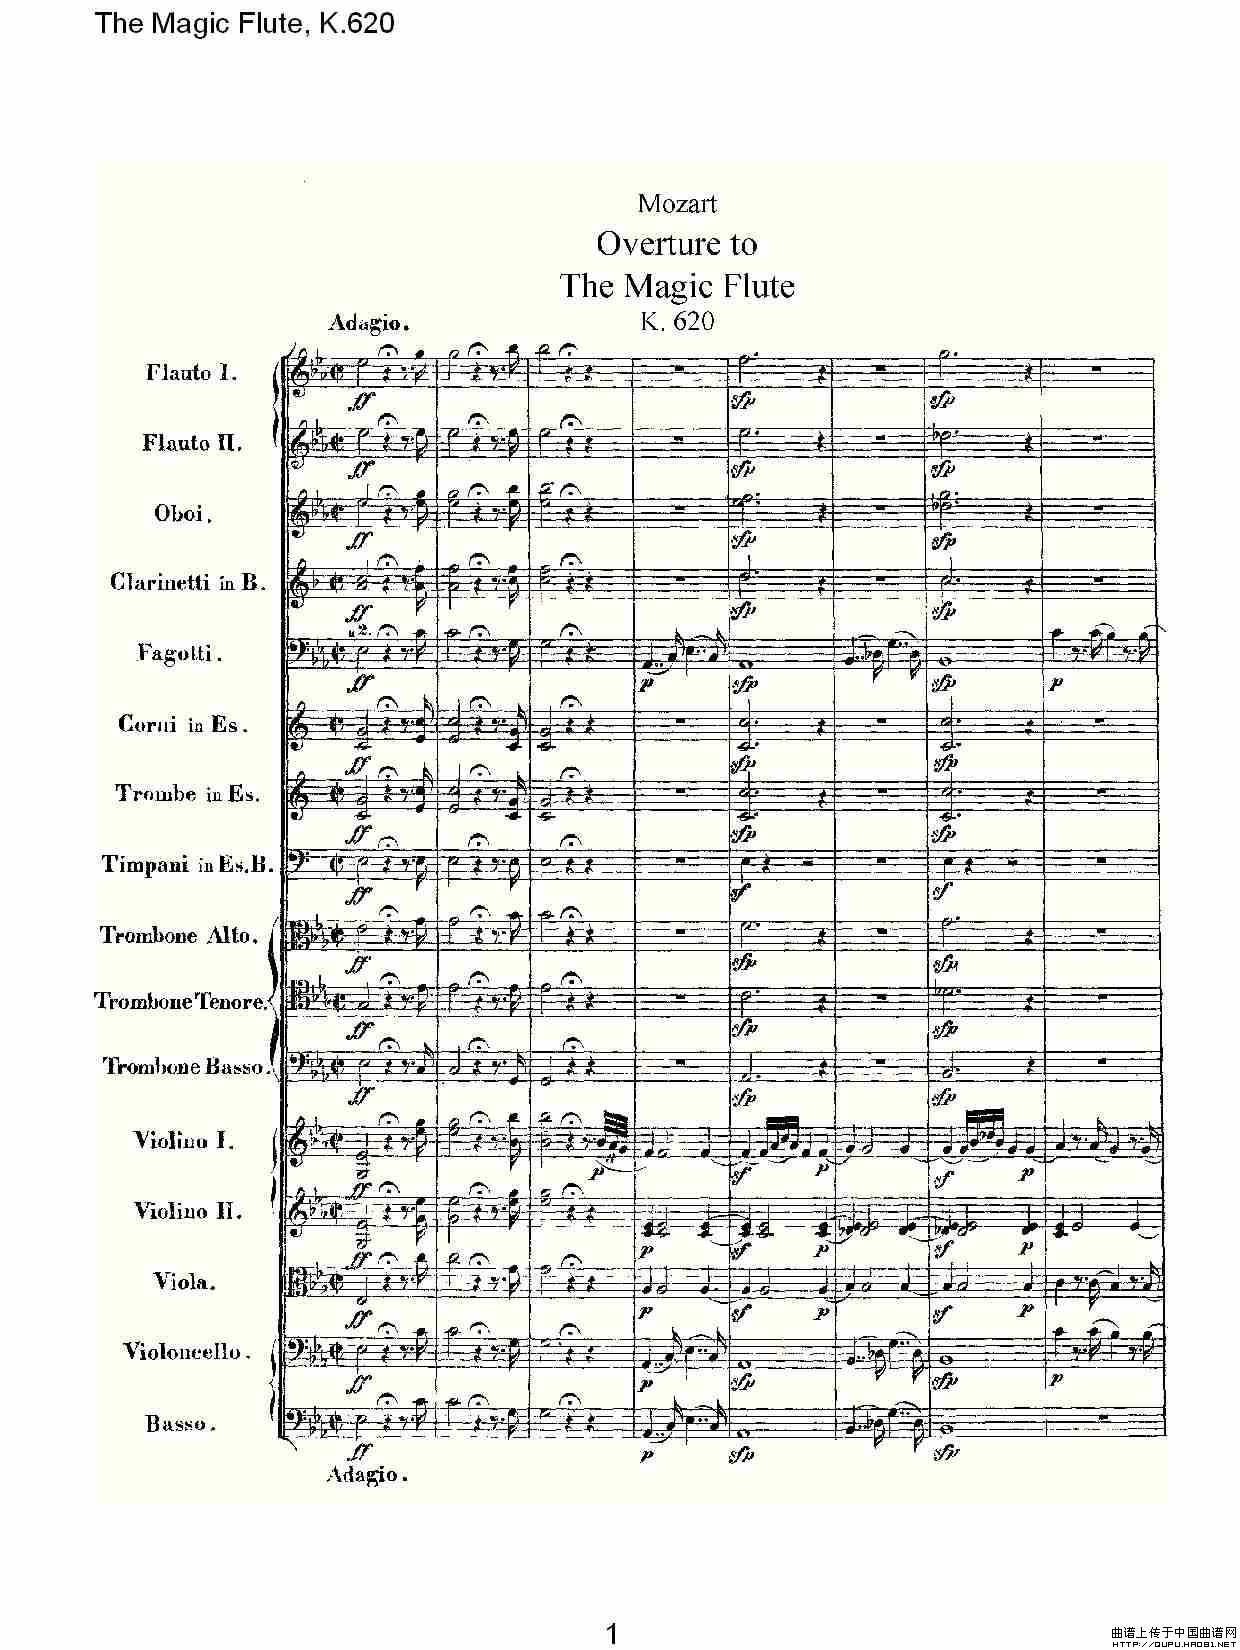 The Magic Flute, K.620